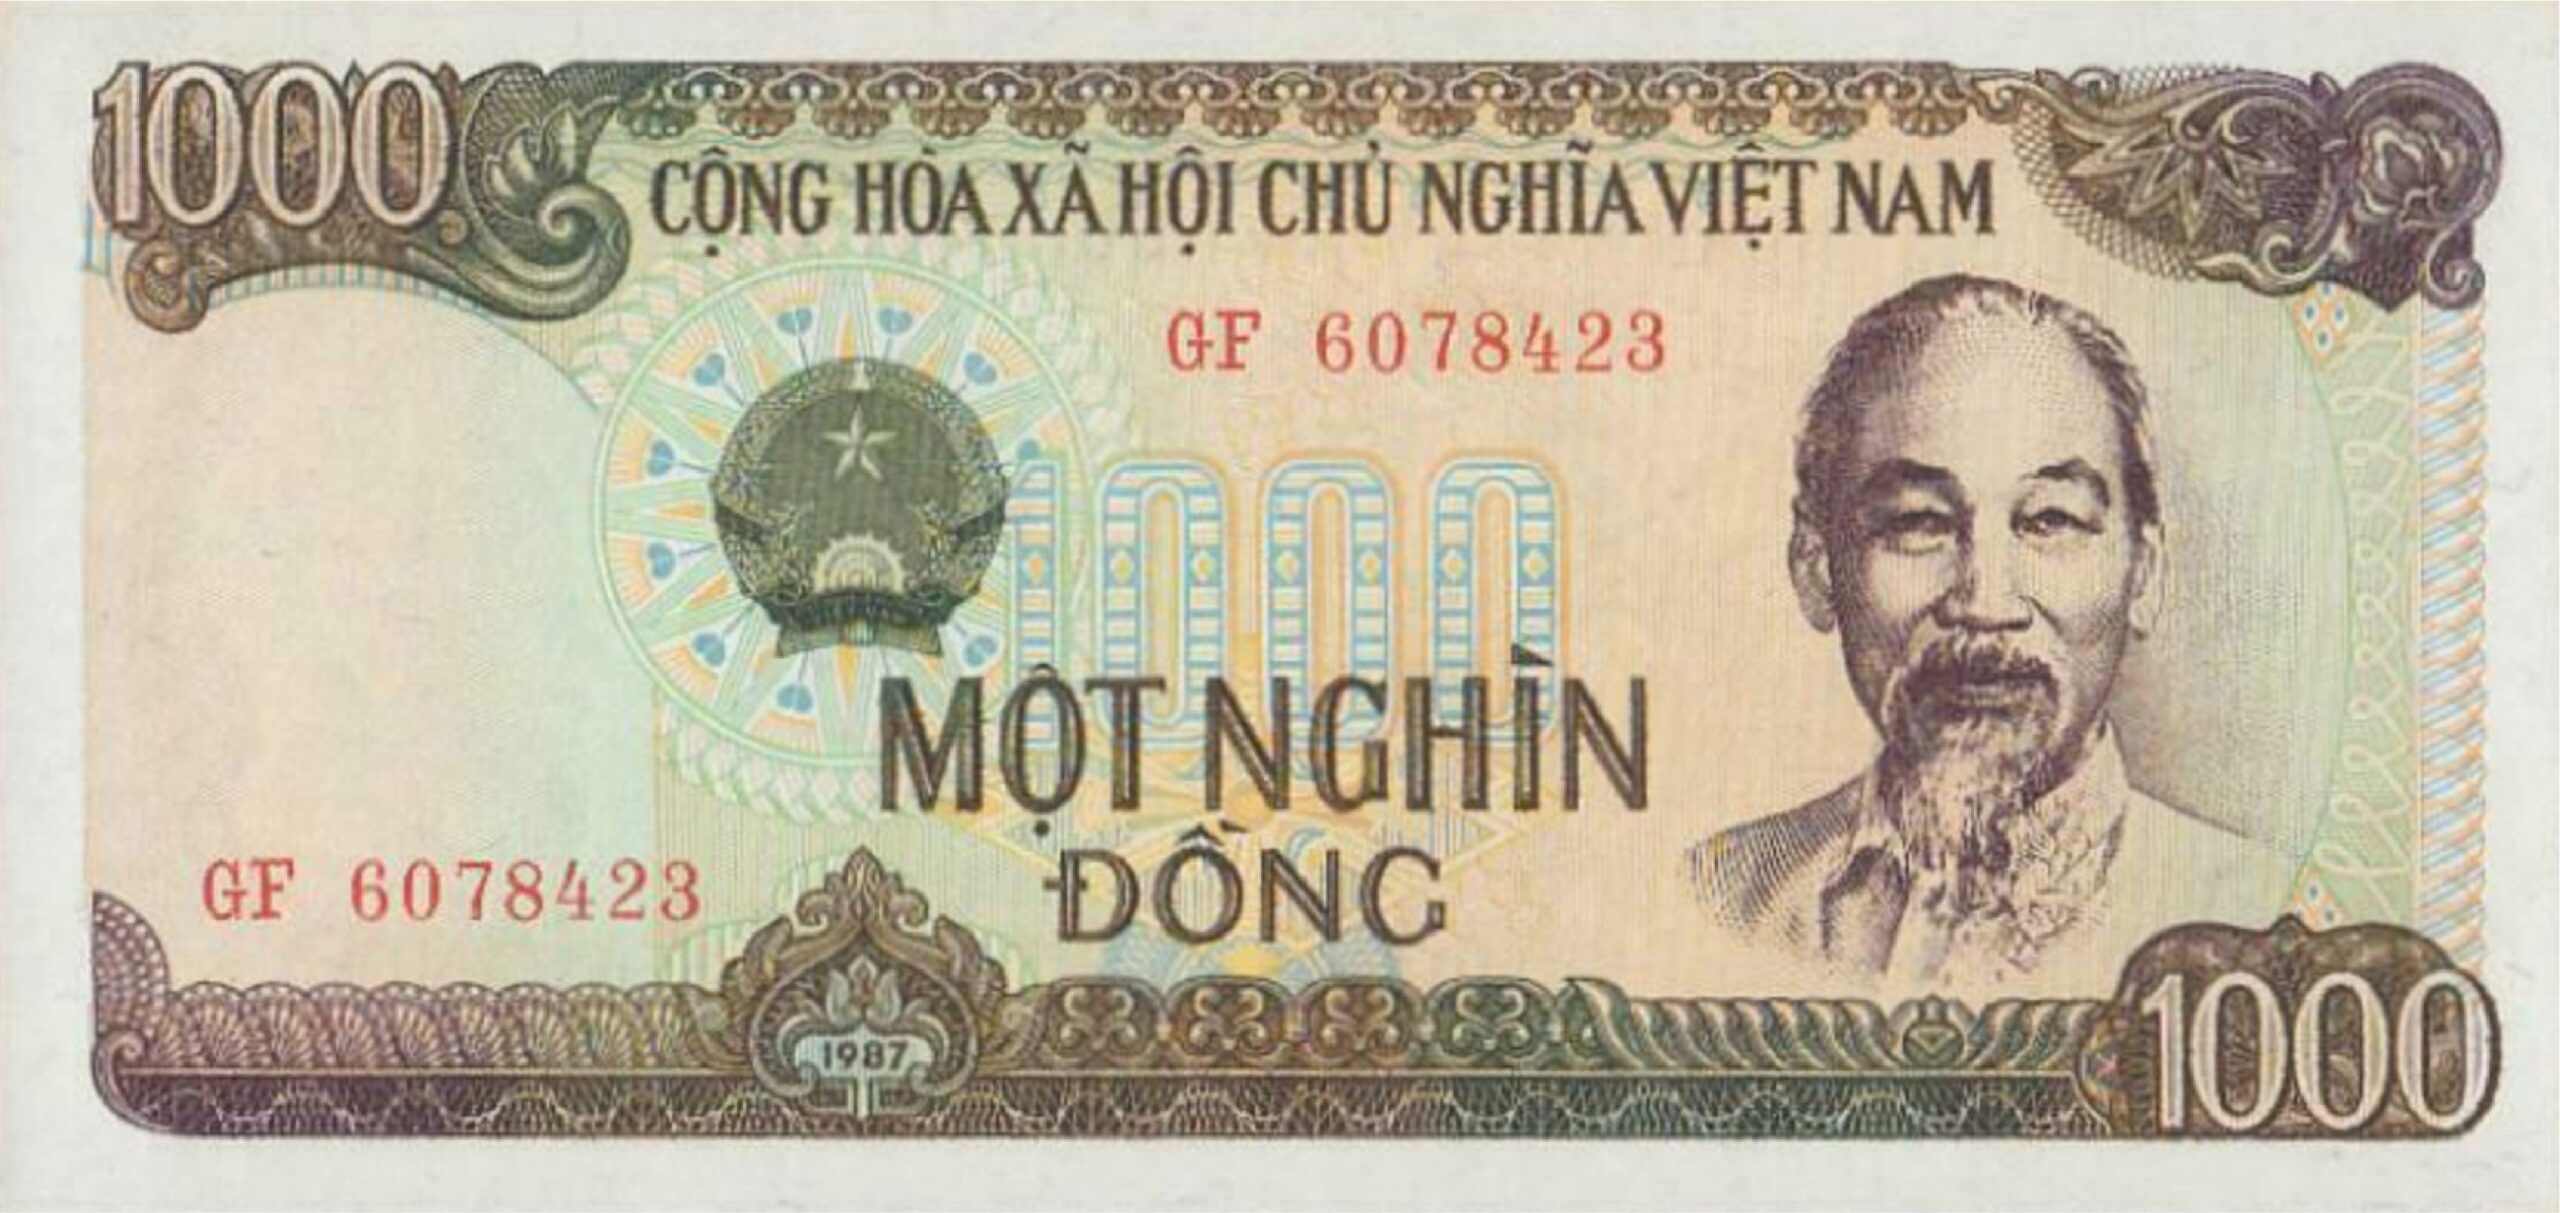 1000 Vietnamese Dong banknote type 1987